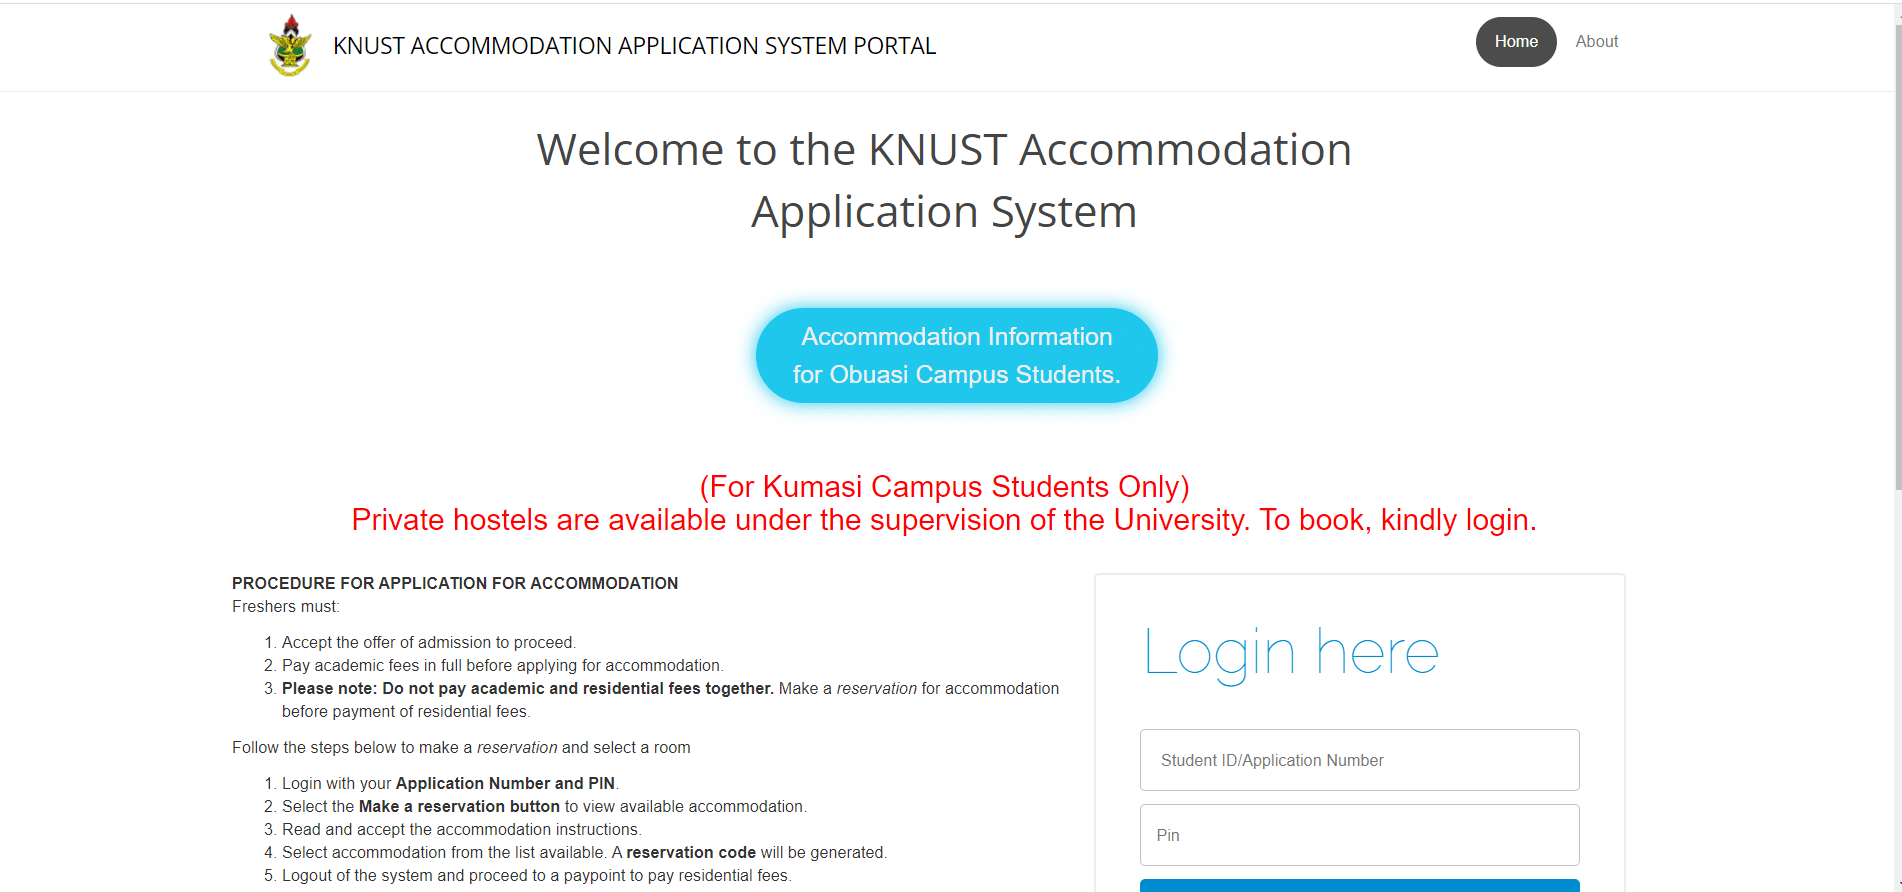 KNUST accommodation portal